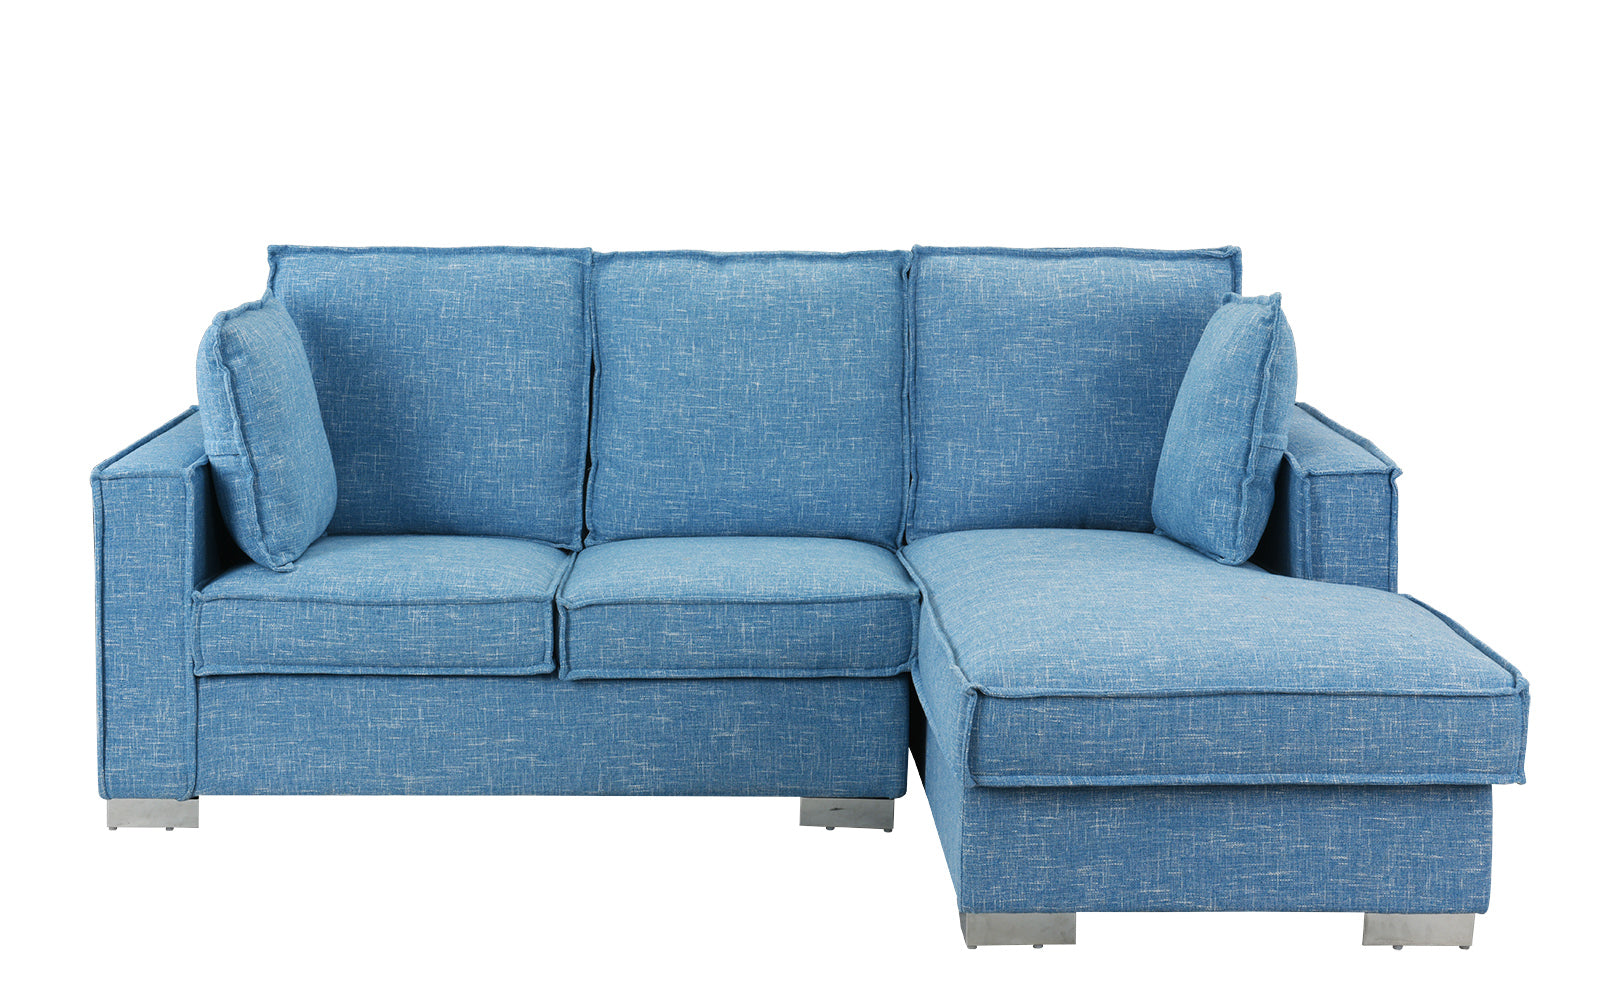 Quinto Contemporary Small Space-Saving Sectional Sofa